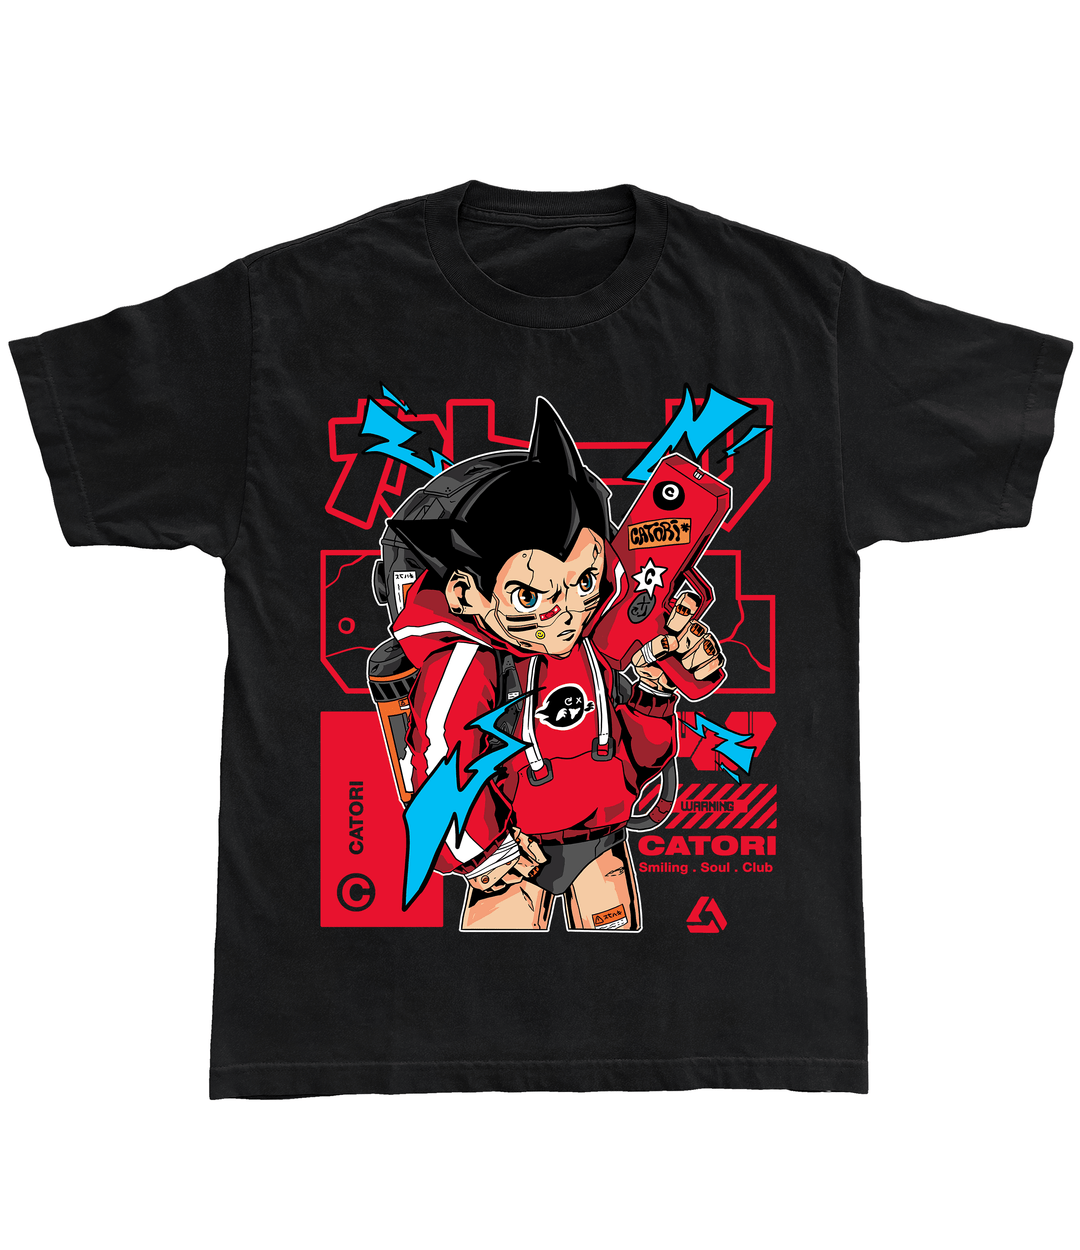 Astro T-Shirt at Catori Clothing | Graphic & Anime Tees, Hoodies & Sweatshirts 